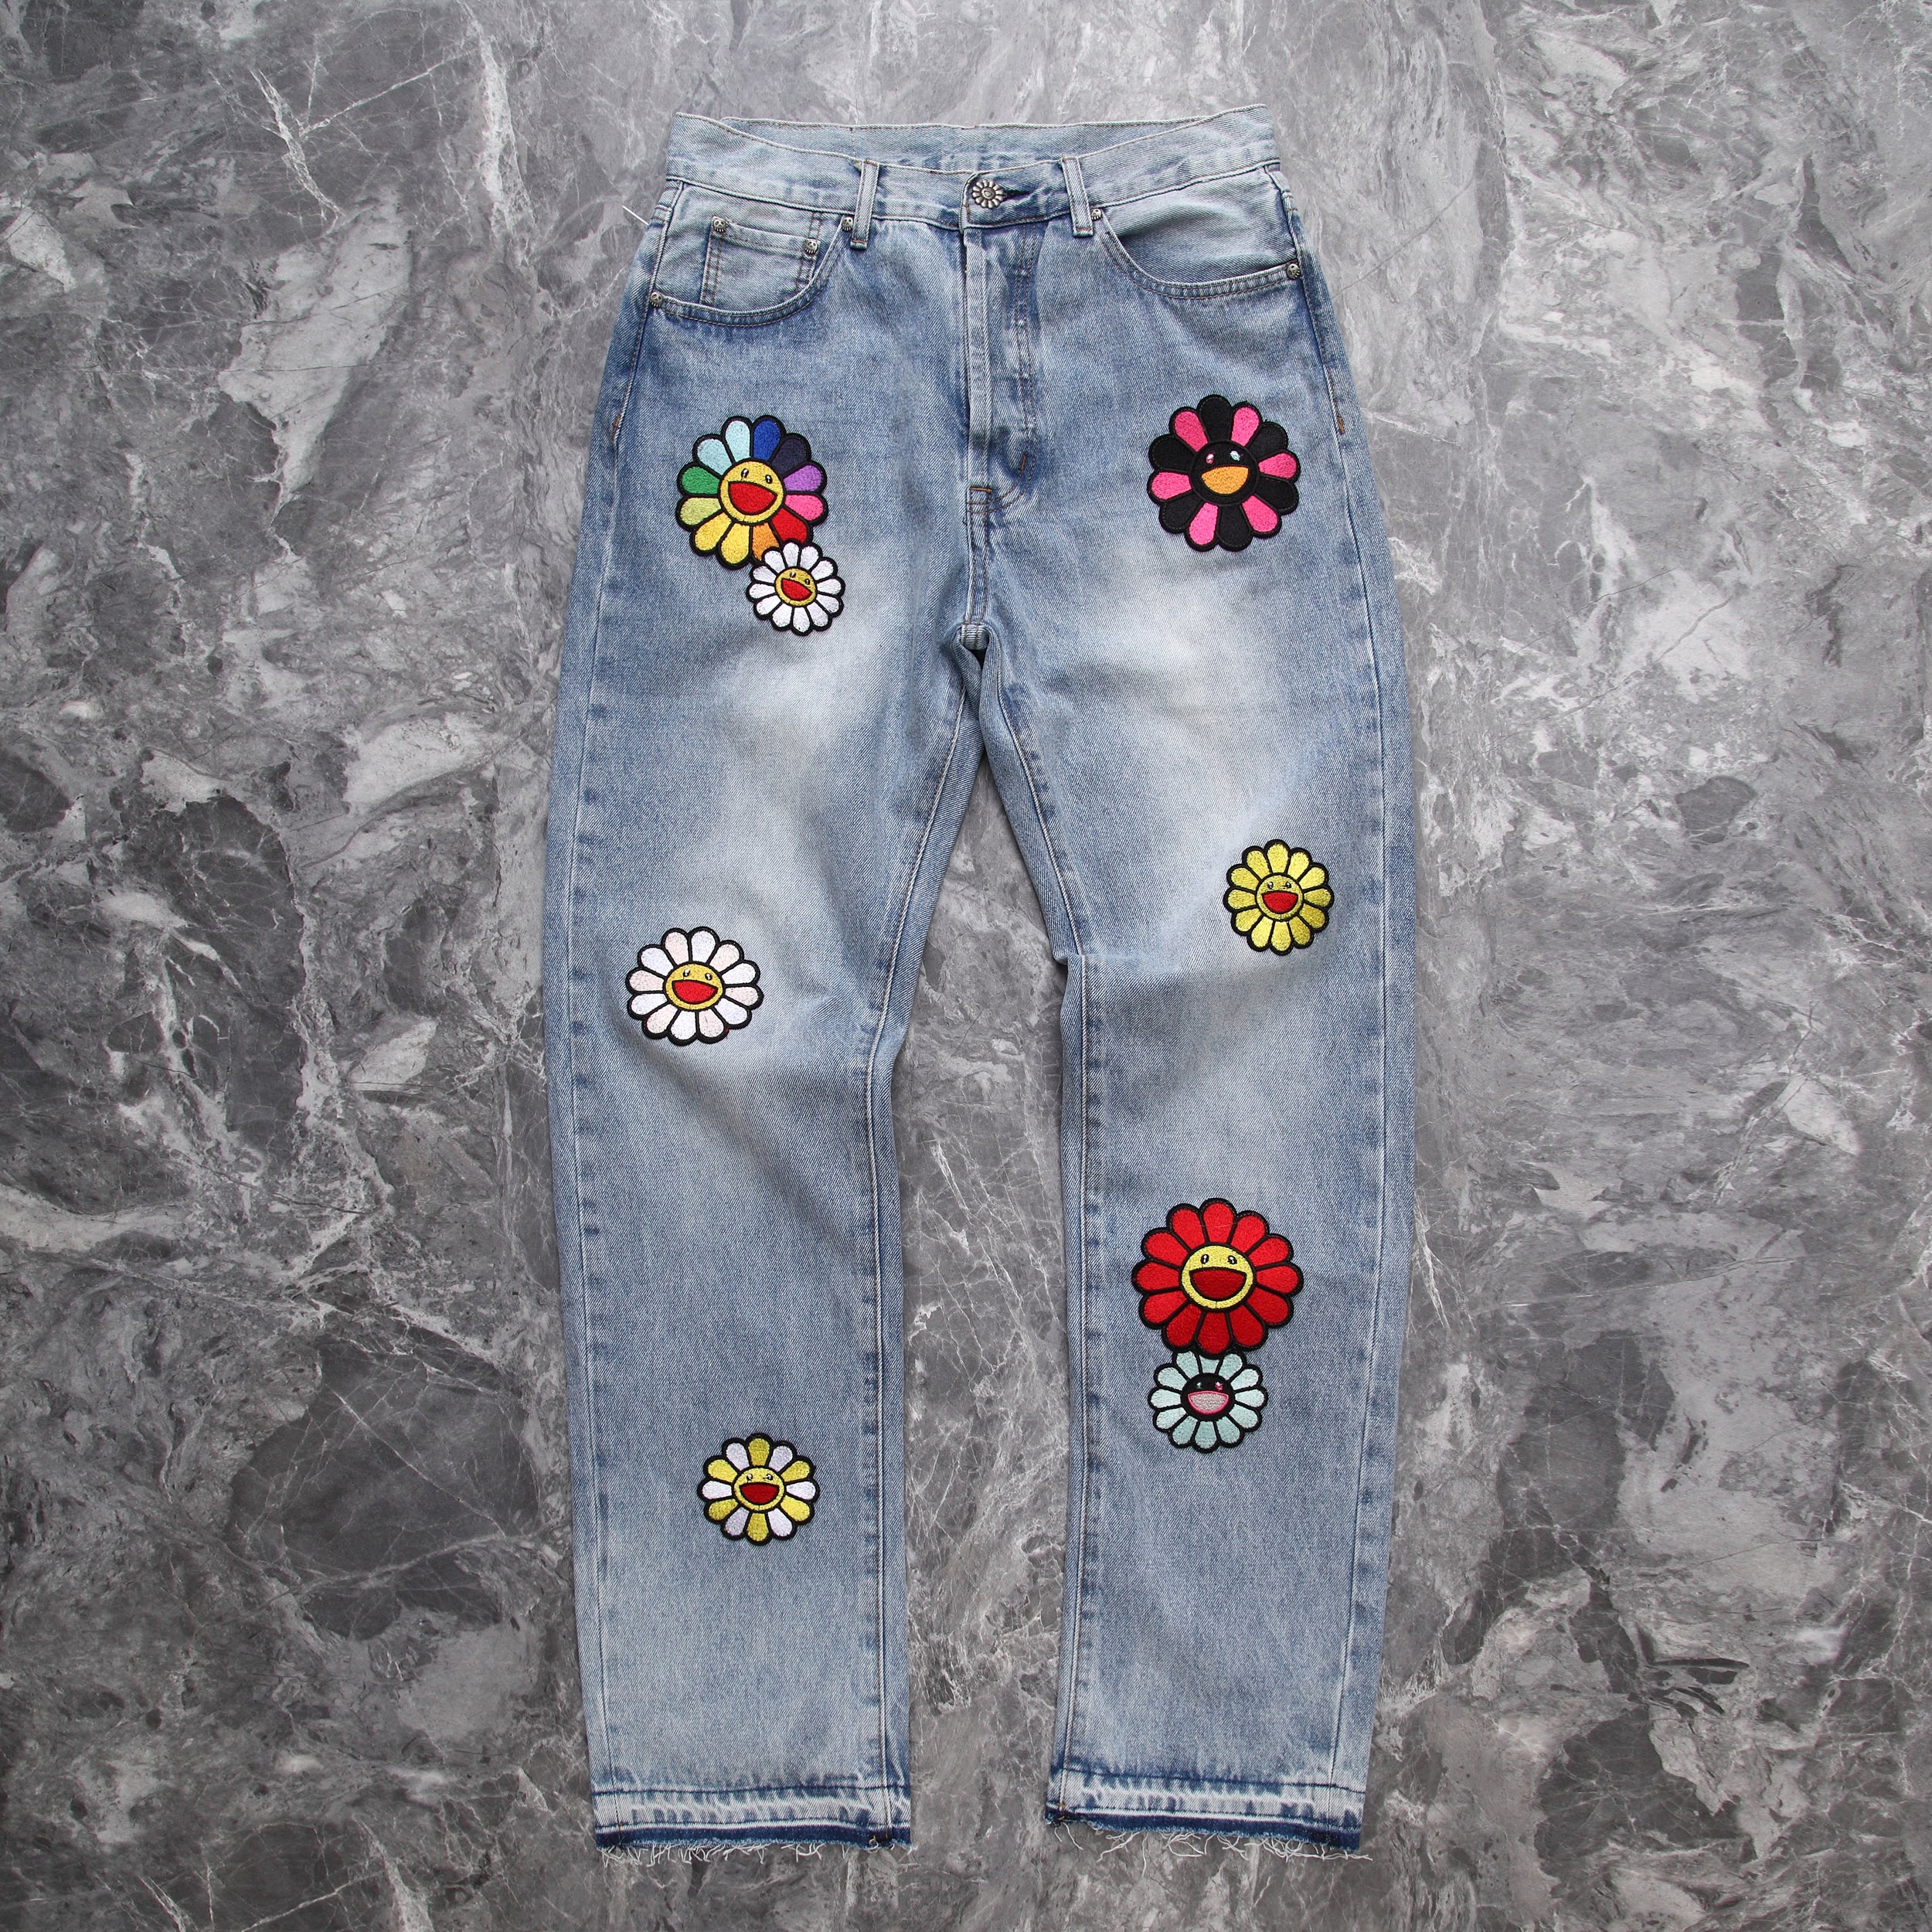 READYMADE X Takashi Murakami Flower Jeans >>FUTUREVVORLD